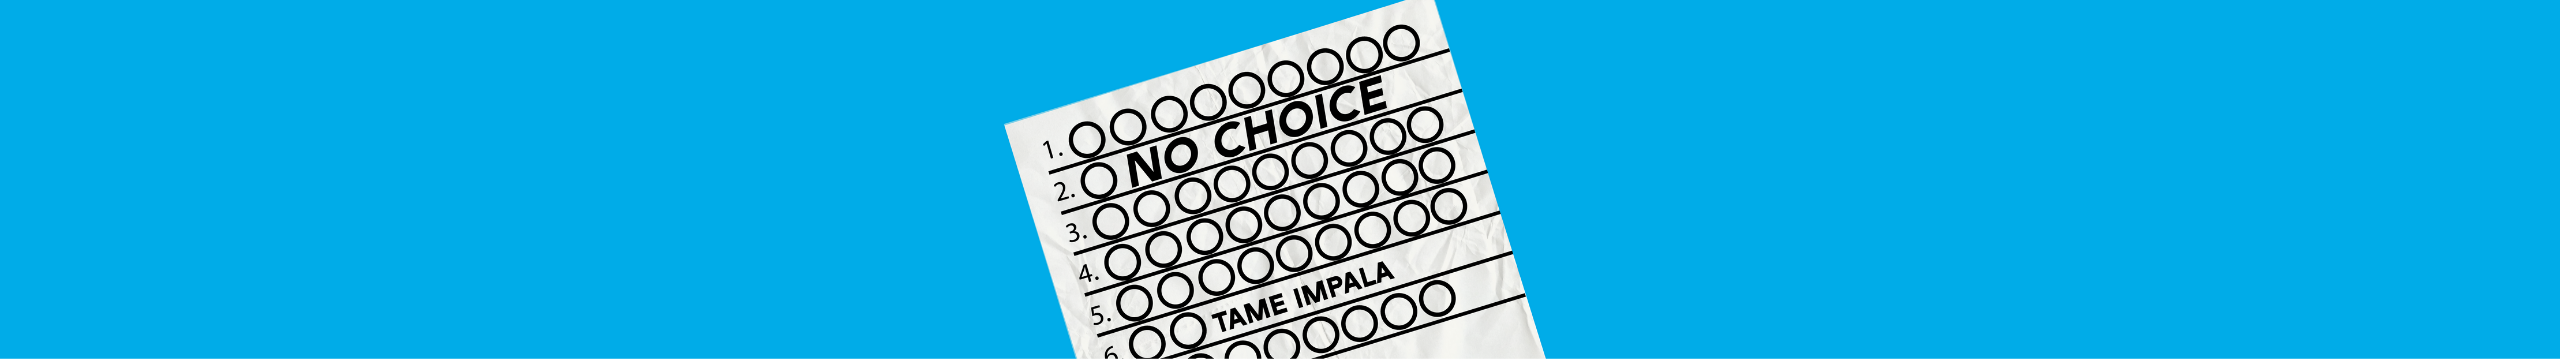 Tame Impala "No Choice"